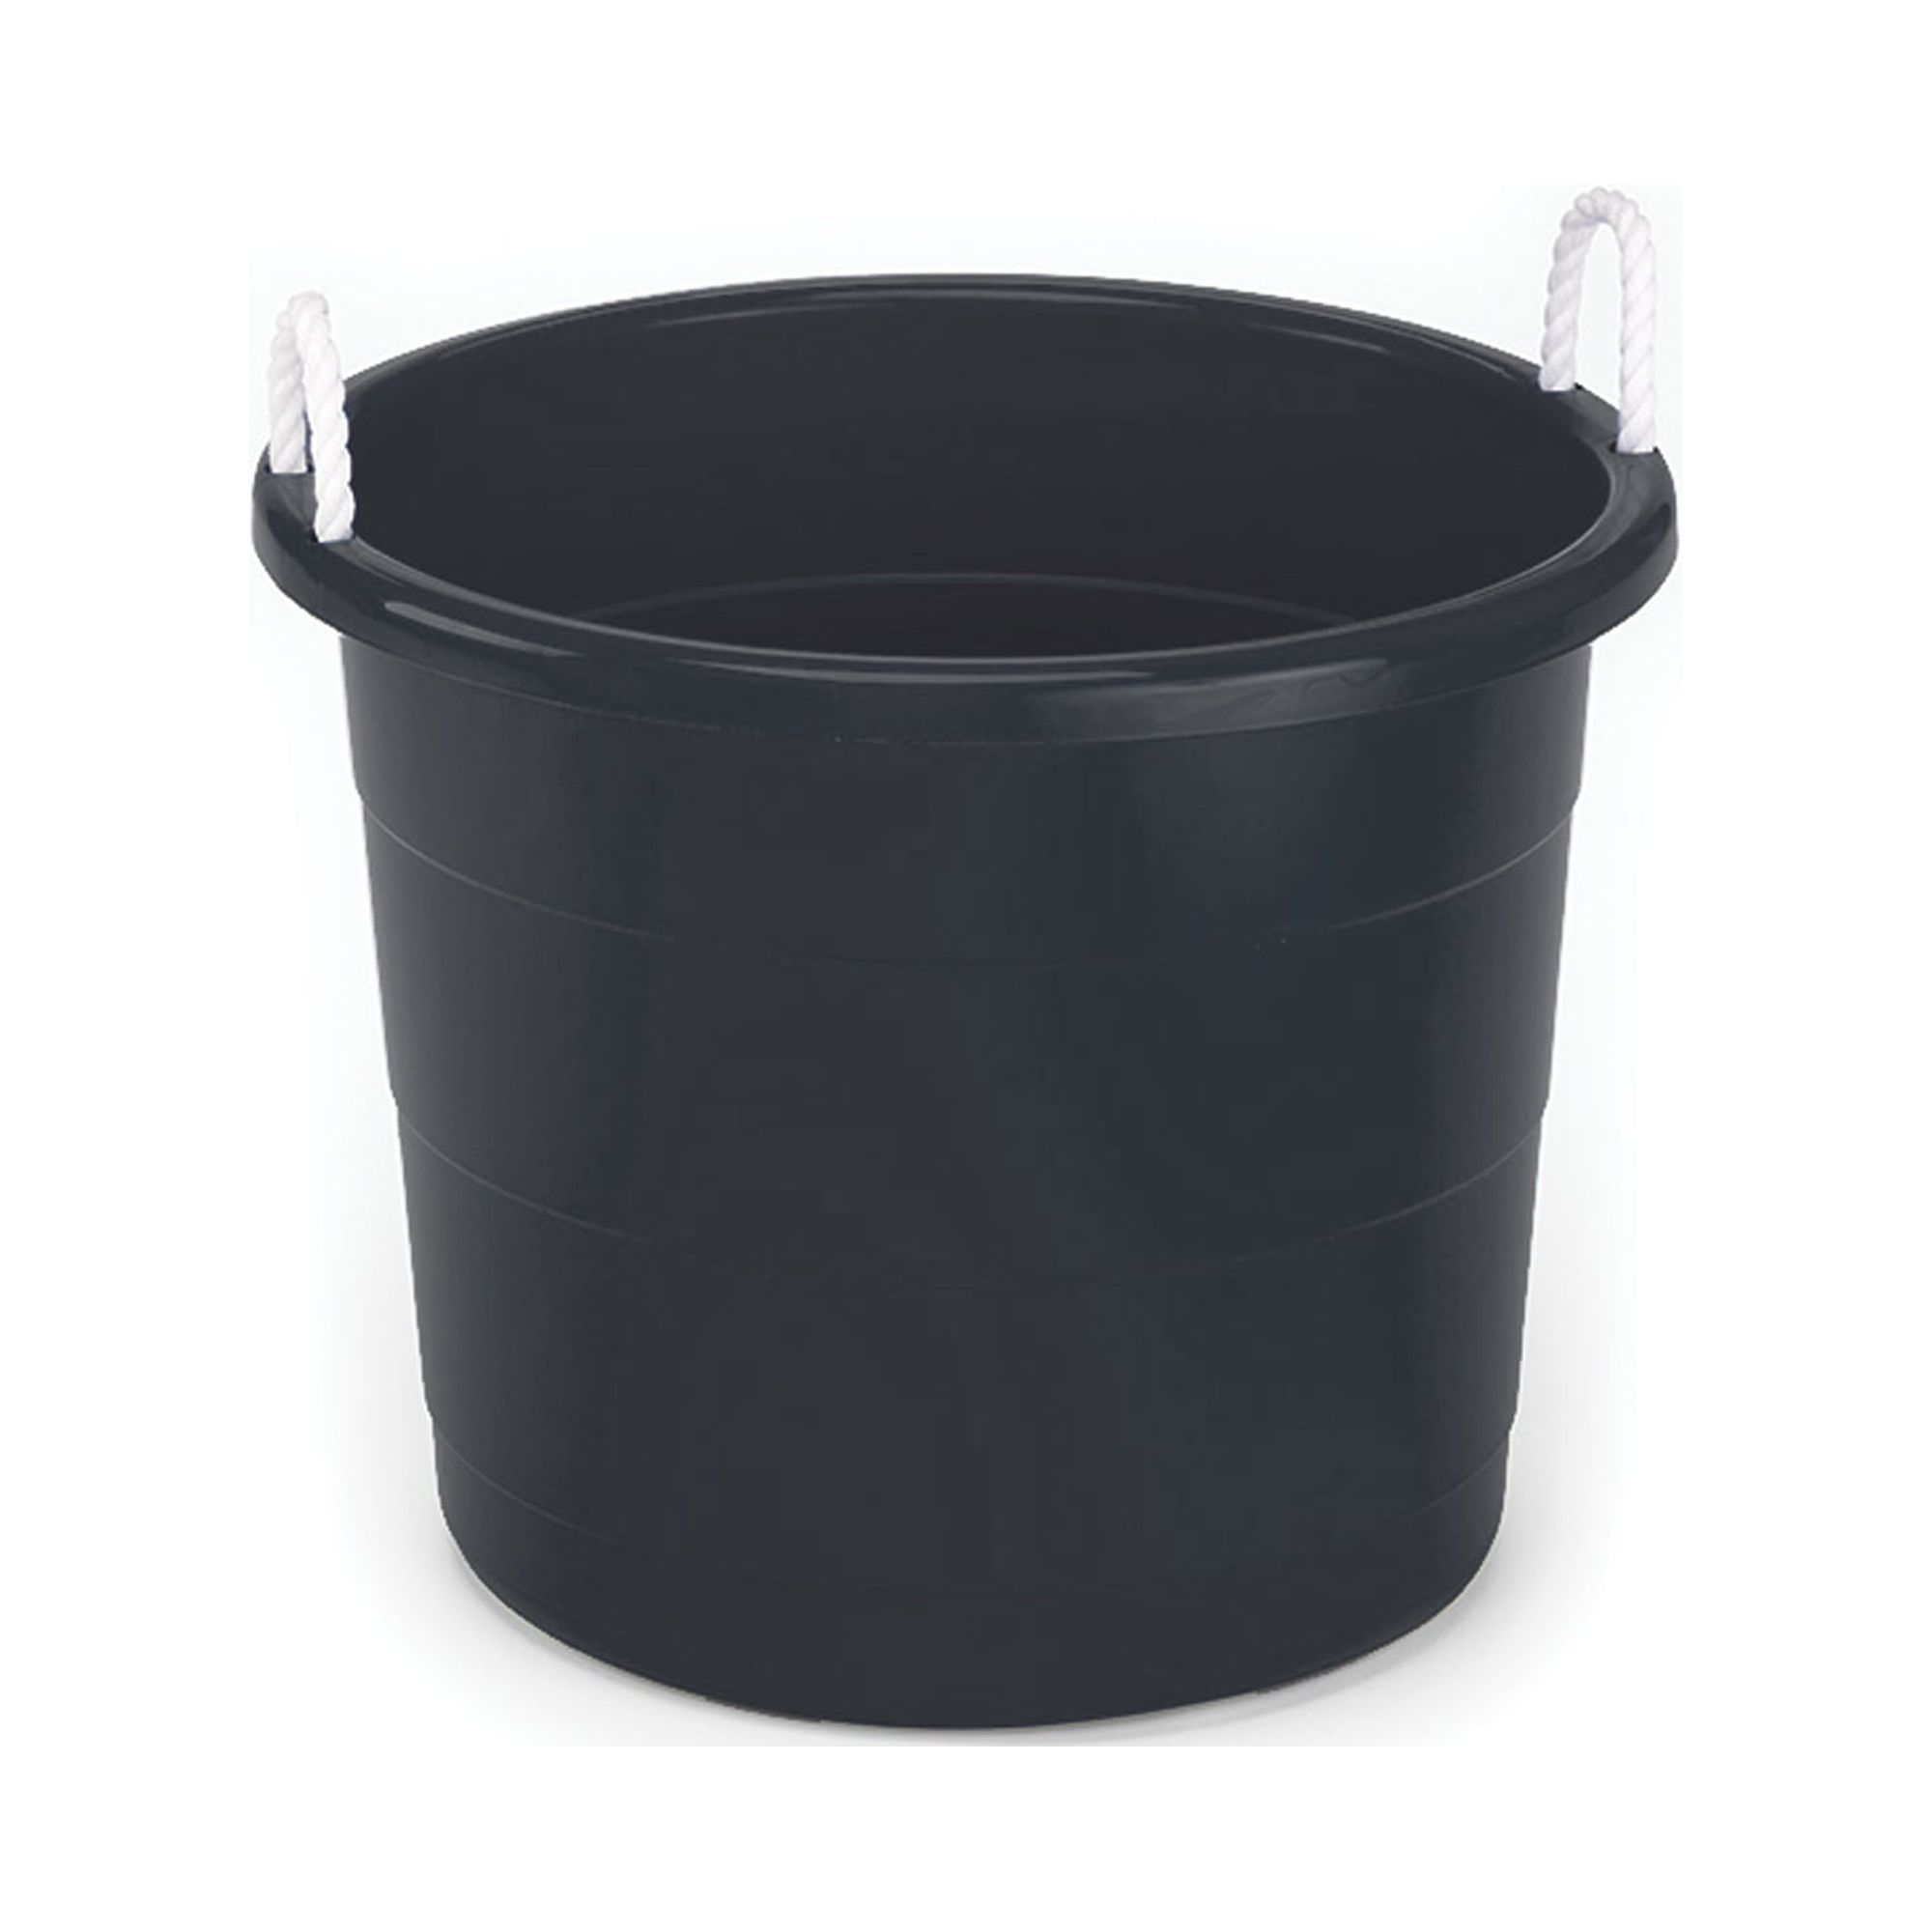 Homz 17 Gallon Rope-Handled Storage Tub, Black, Set of 2 - image 1 of 4